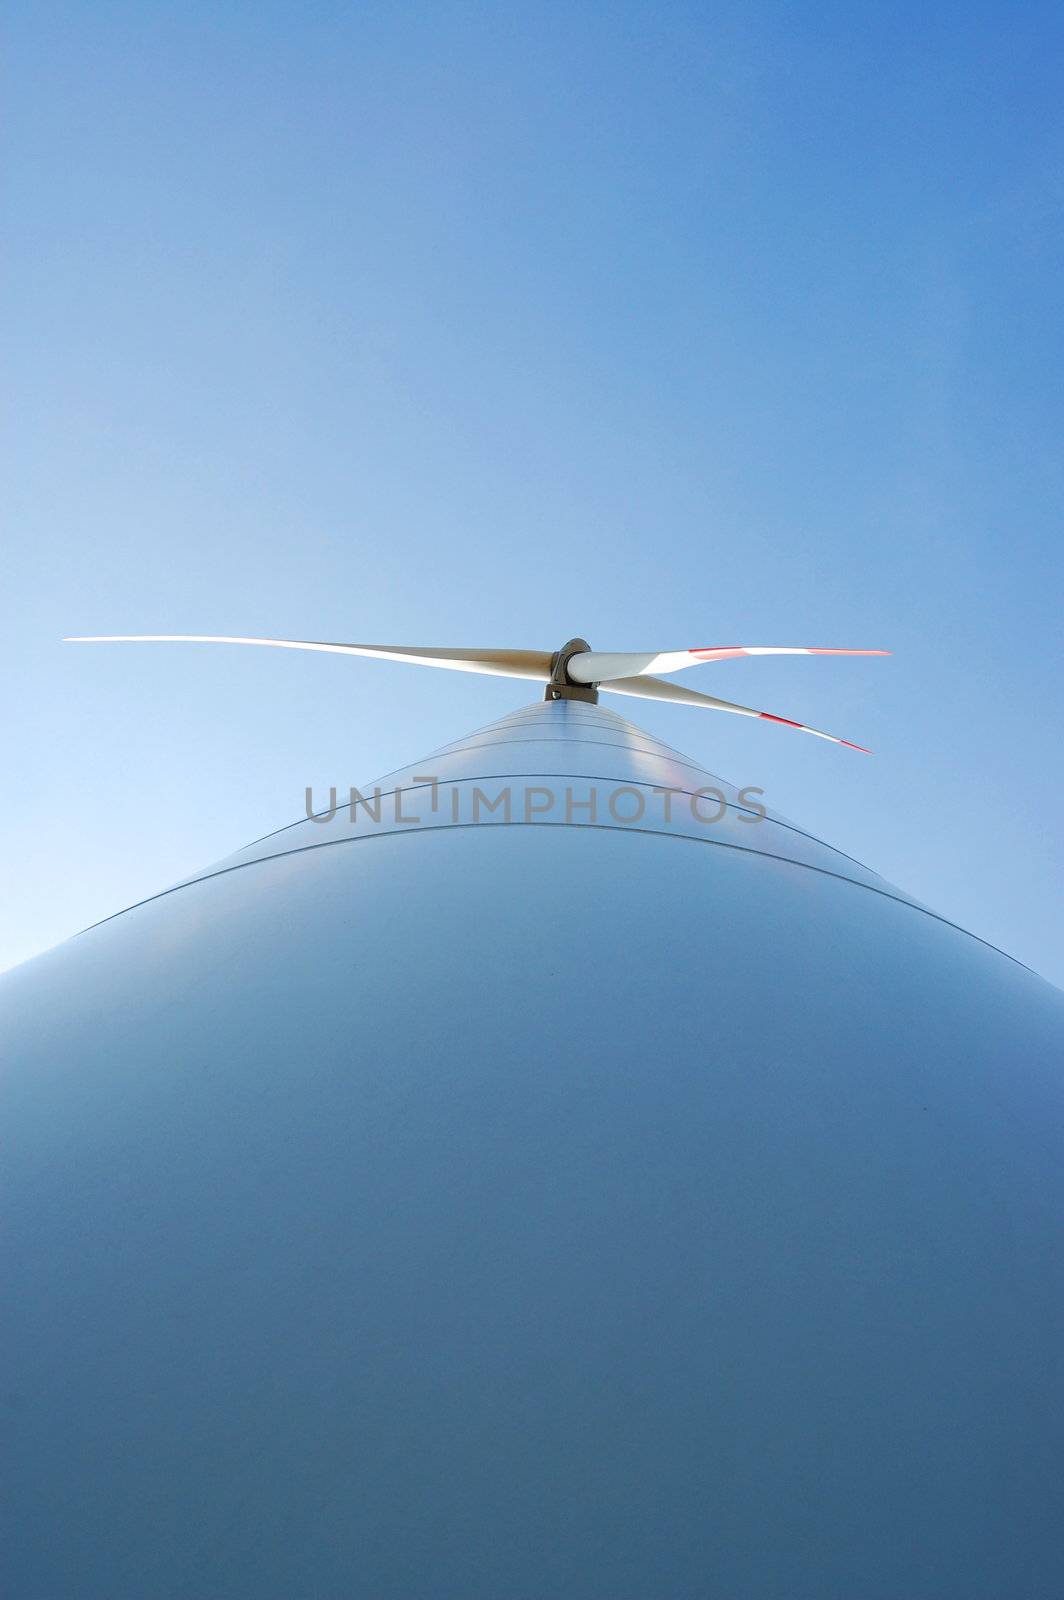 wind turbine under blue sky for alternative energy